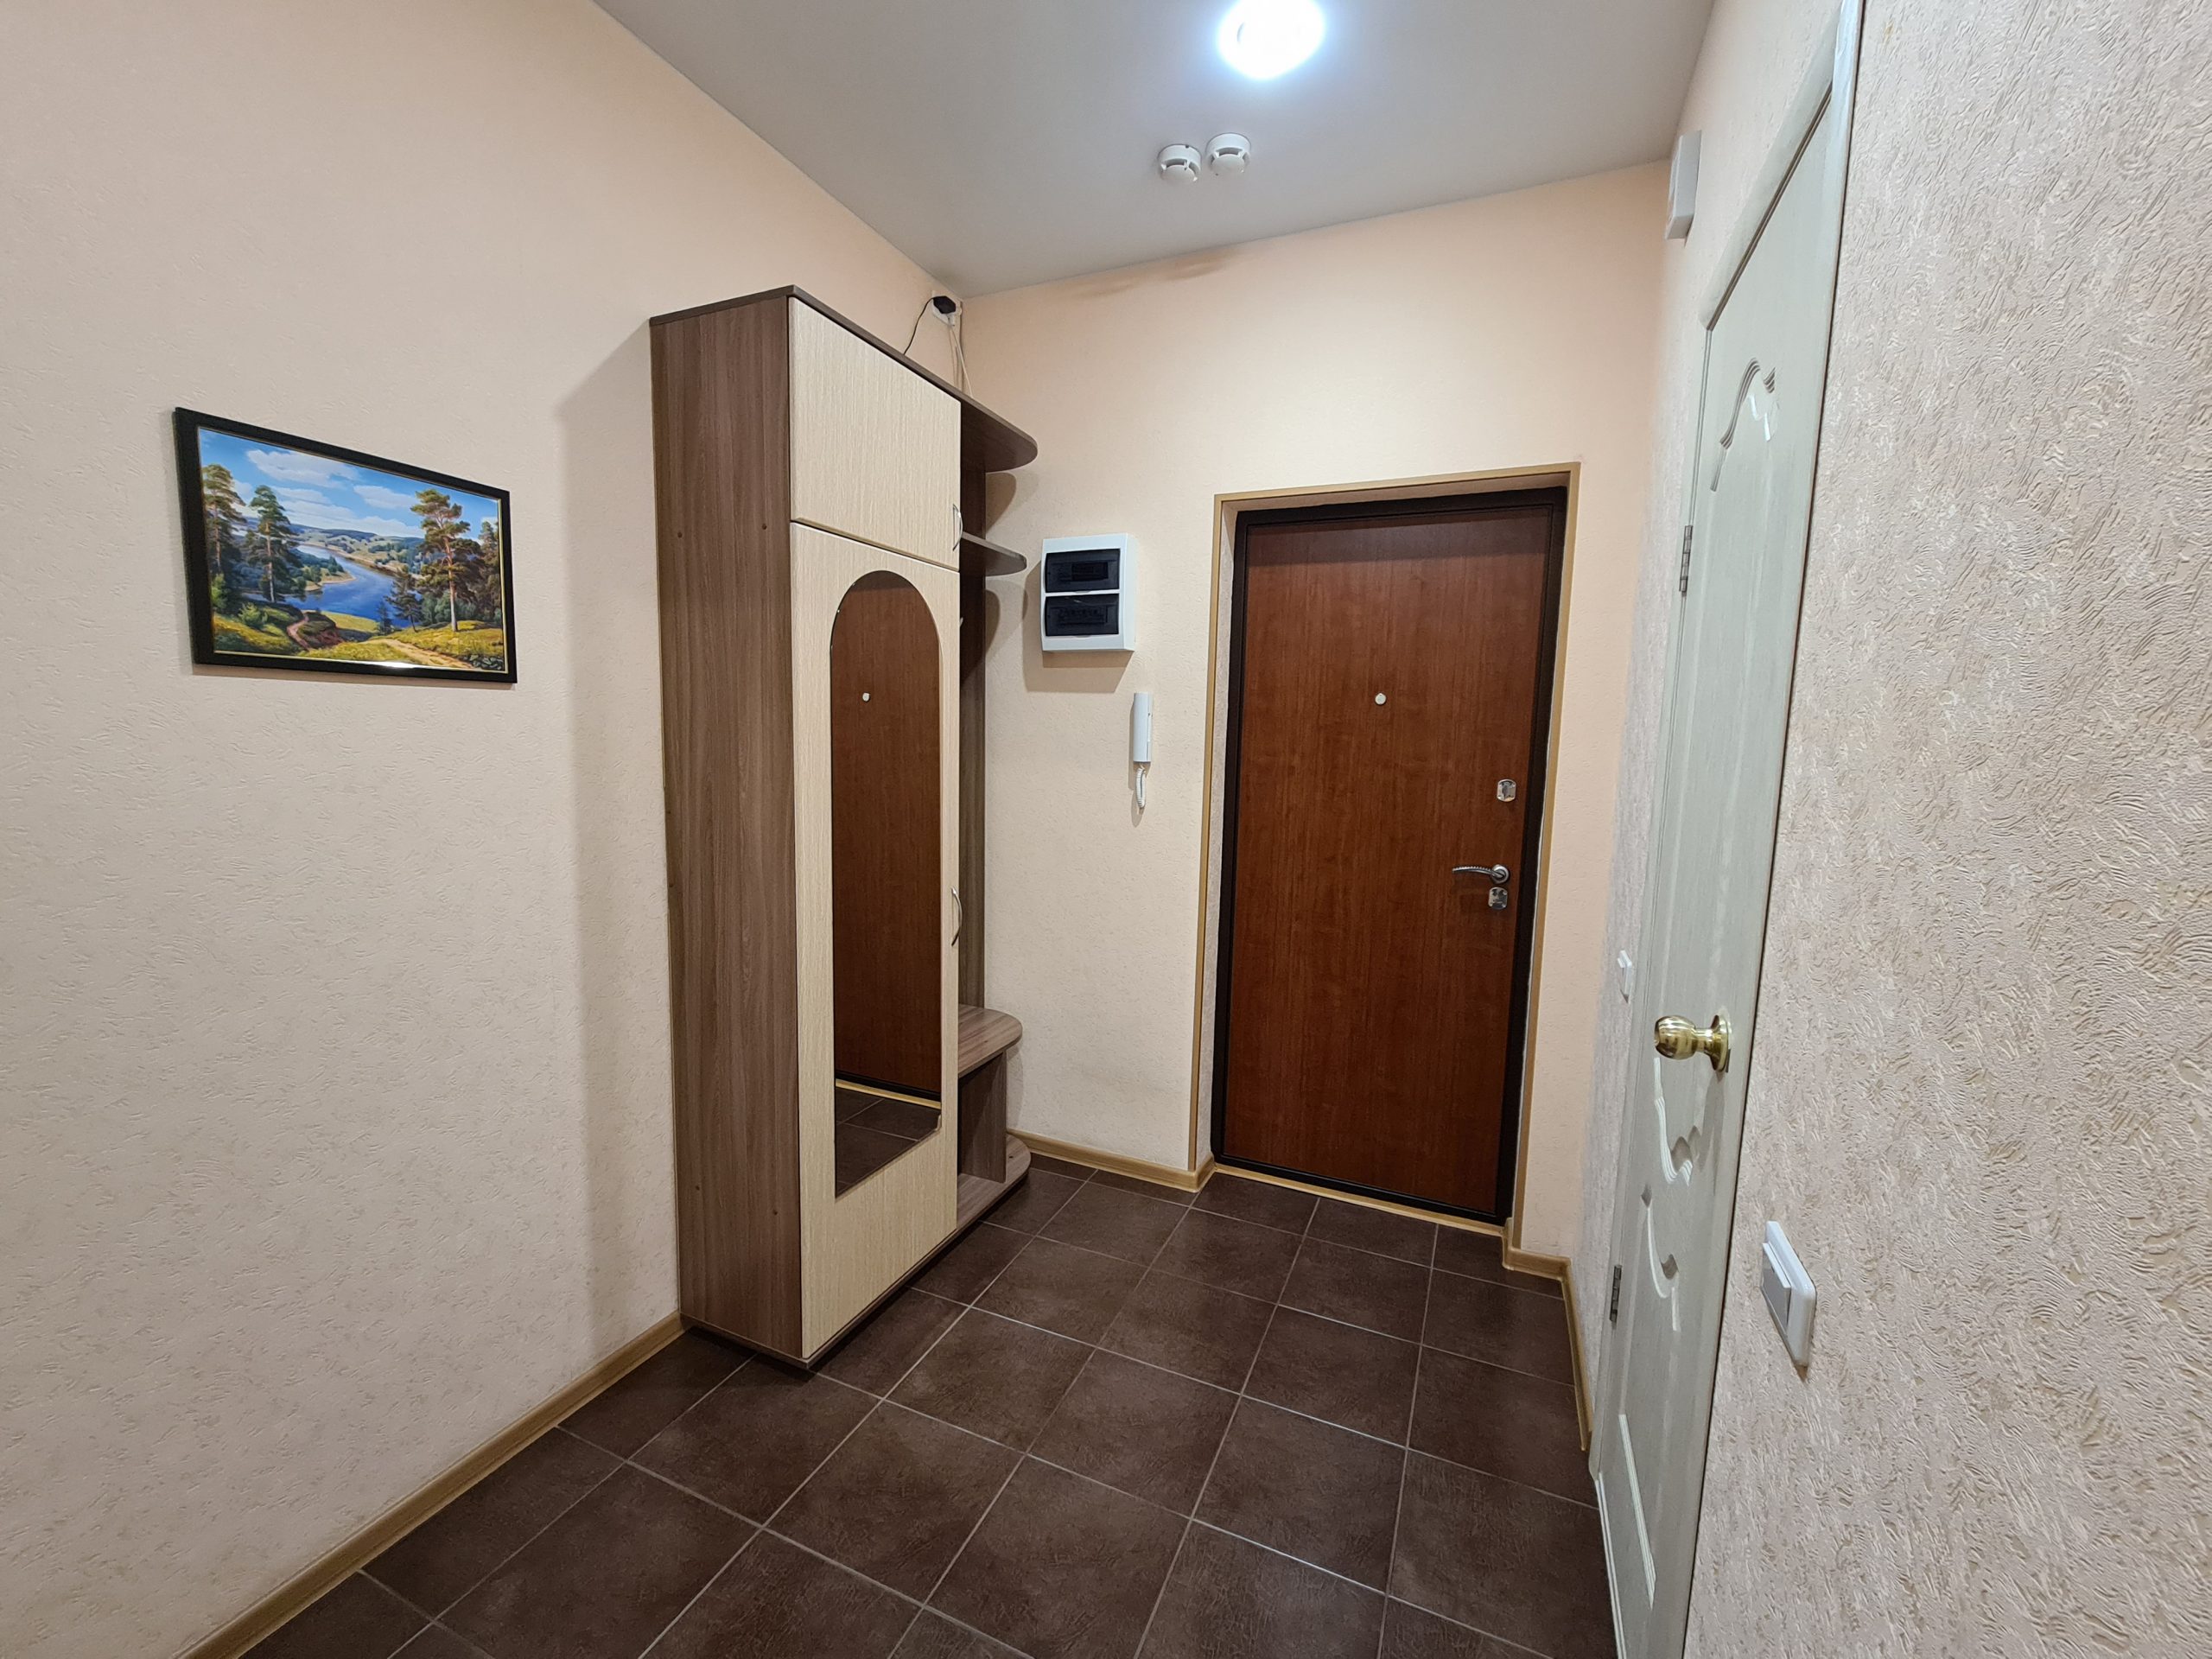 Однокомнатная квартира на Пр. Притомский, 9 (37кв.м)до 4 гостей